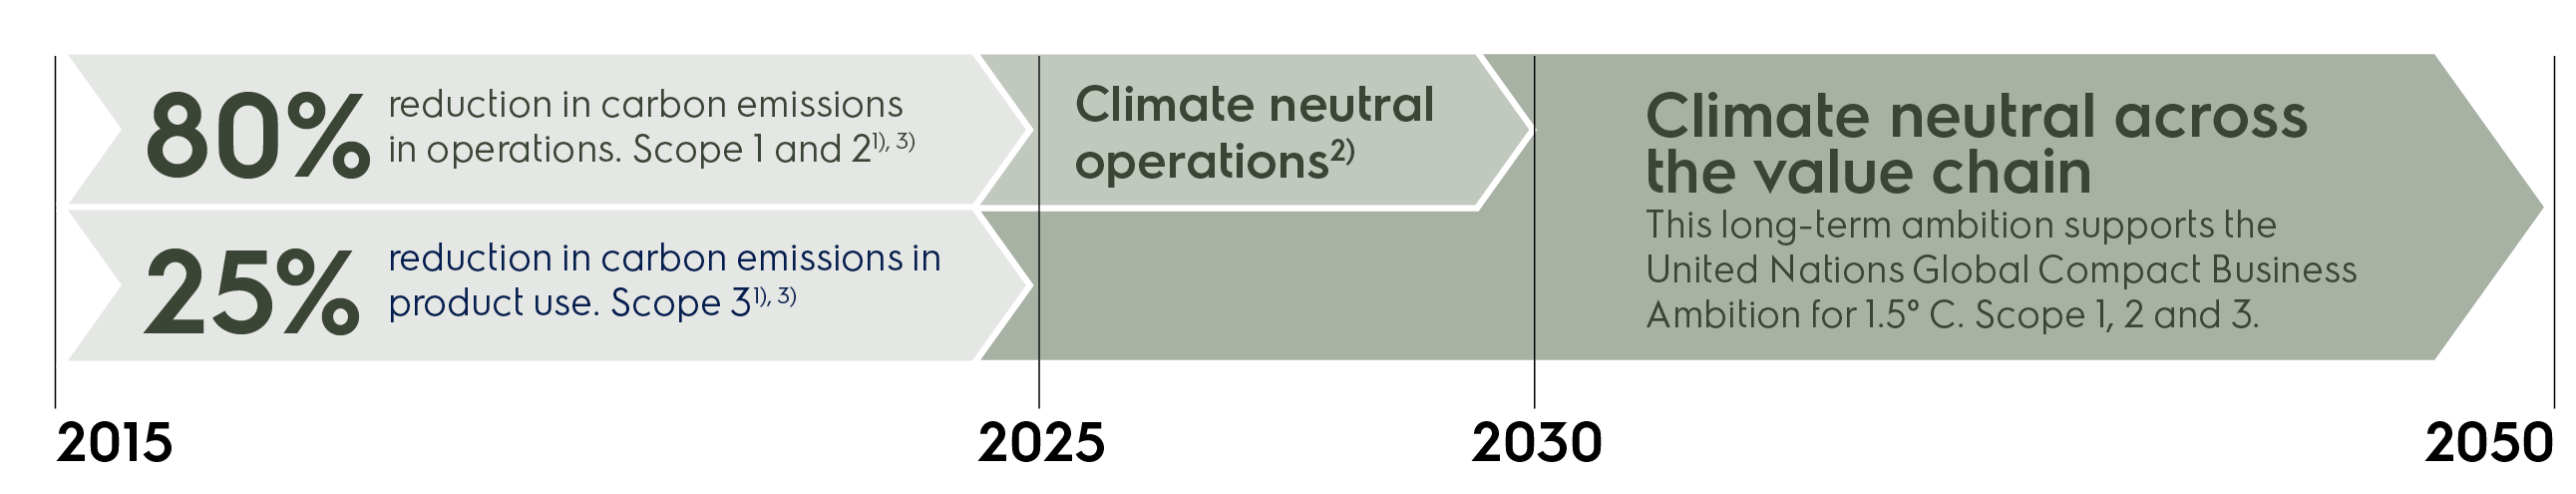 climate-neutrality-roadmap-on-white-b